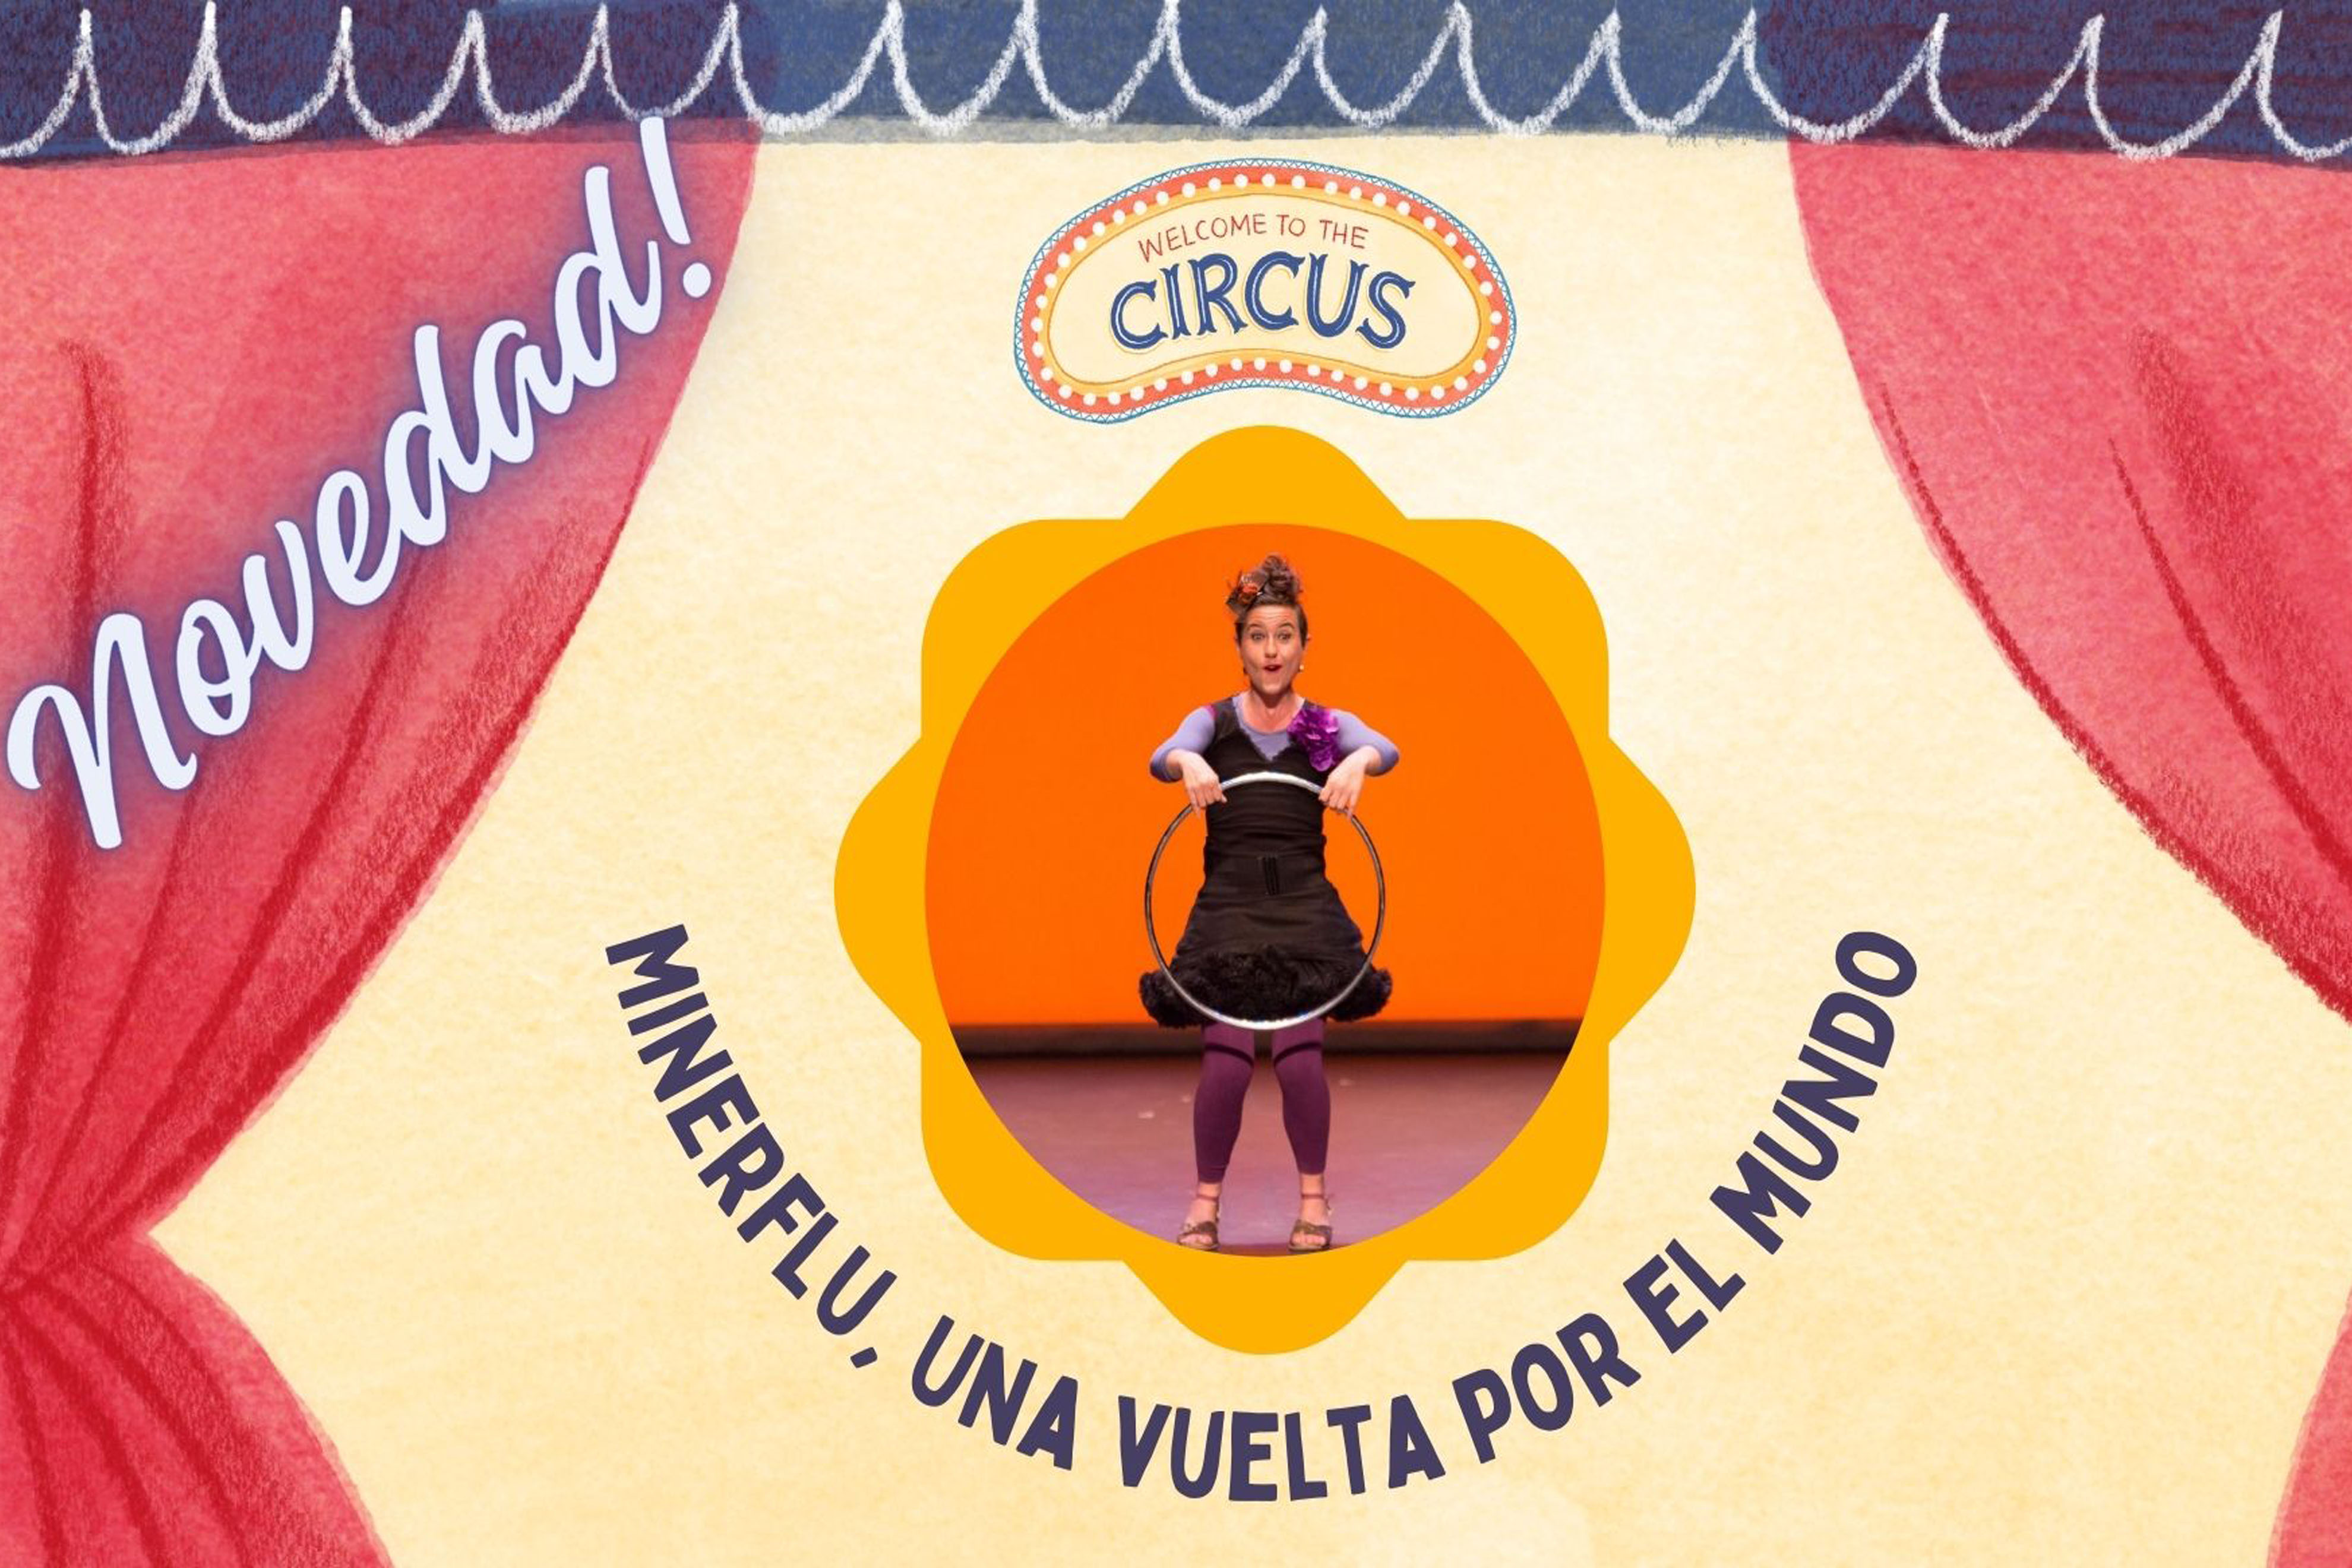 Minerflu, una vuelta por el mundo de Hipnótica Circo Teatro